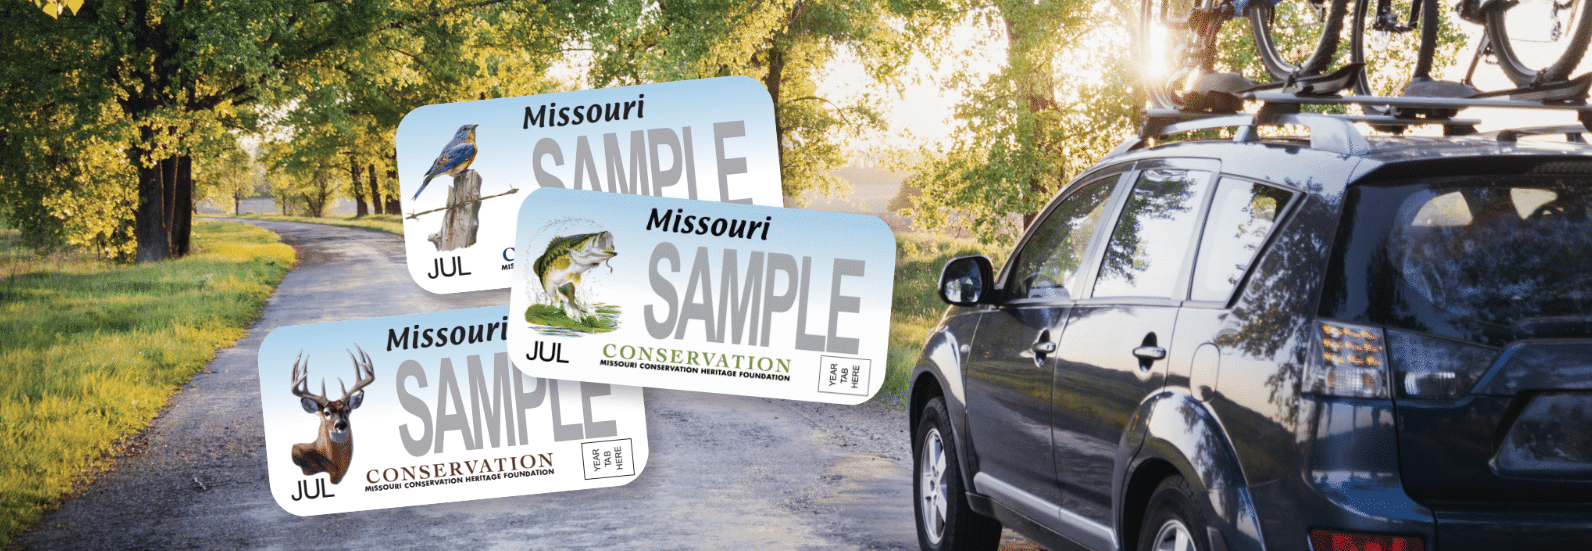 Conservation Heritage License Plates - Missouri Conservation Heritage  Foundation